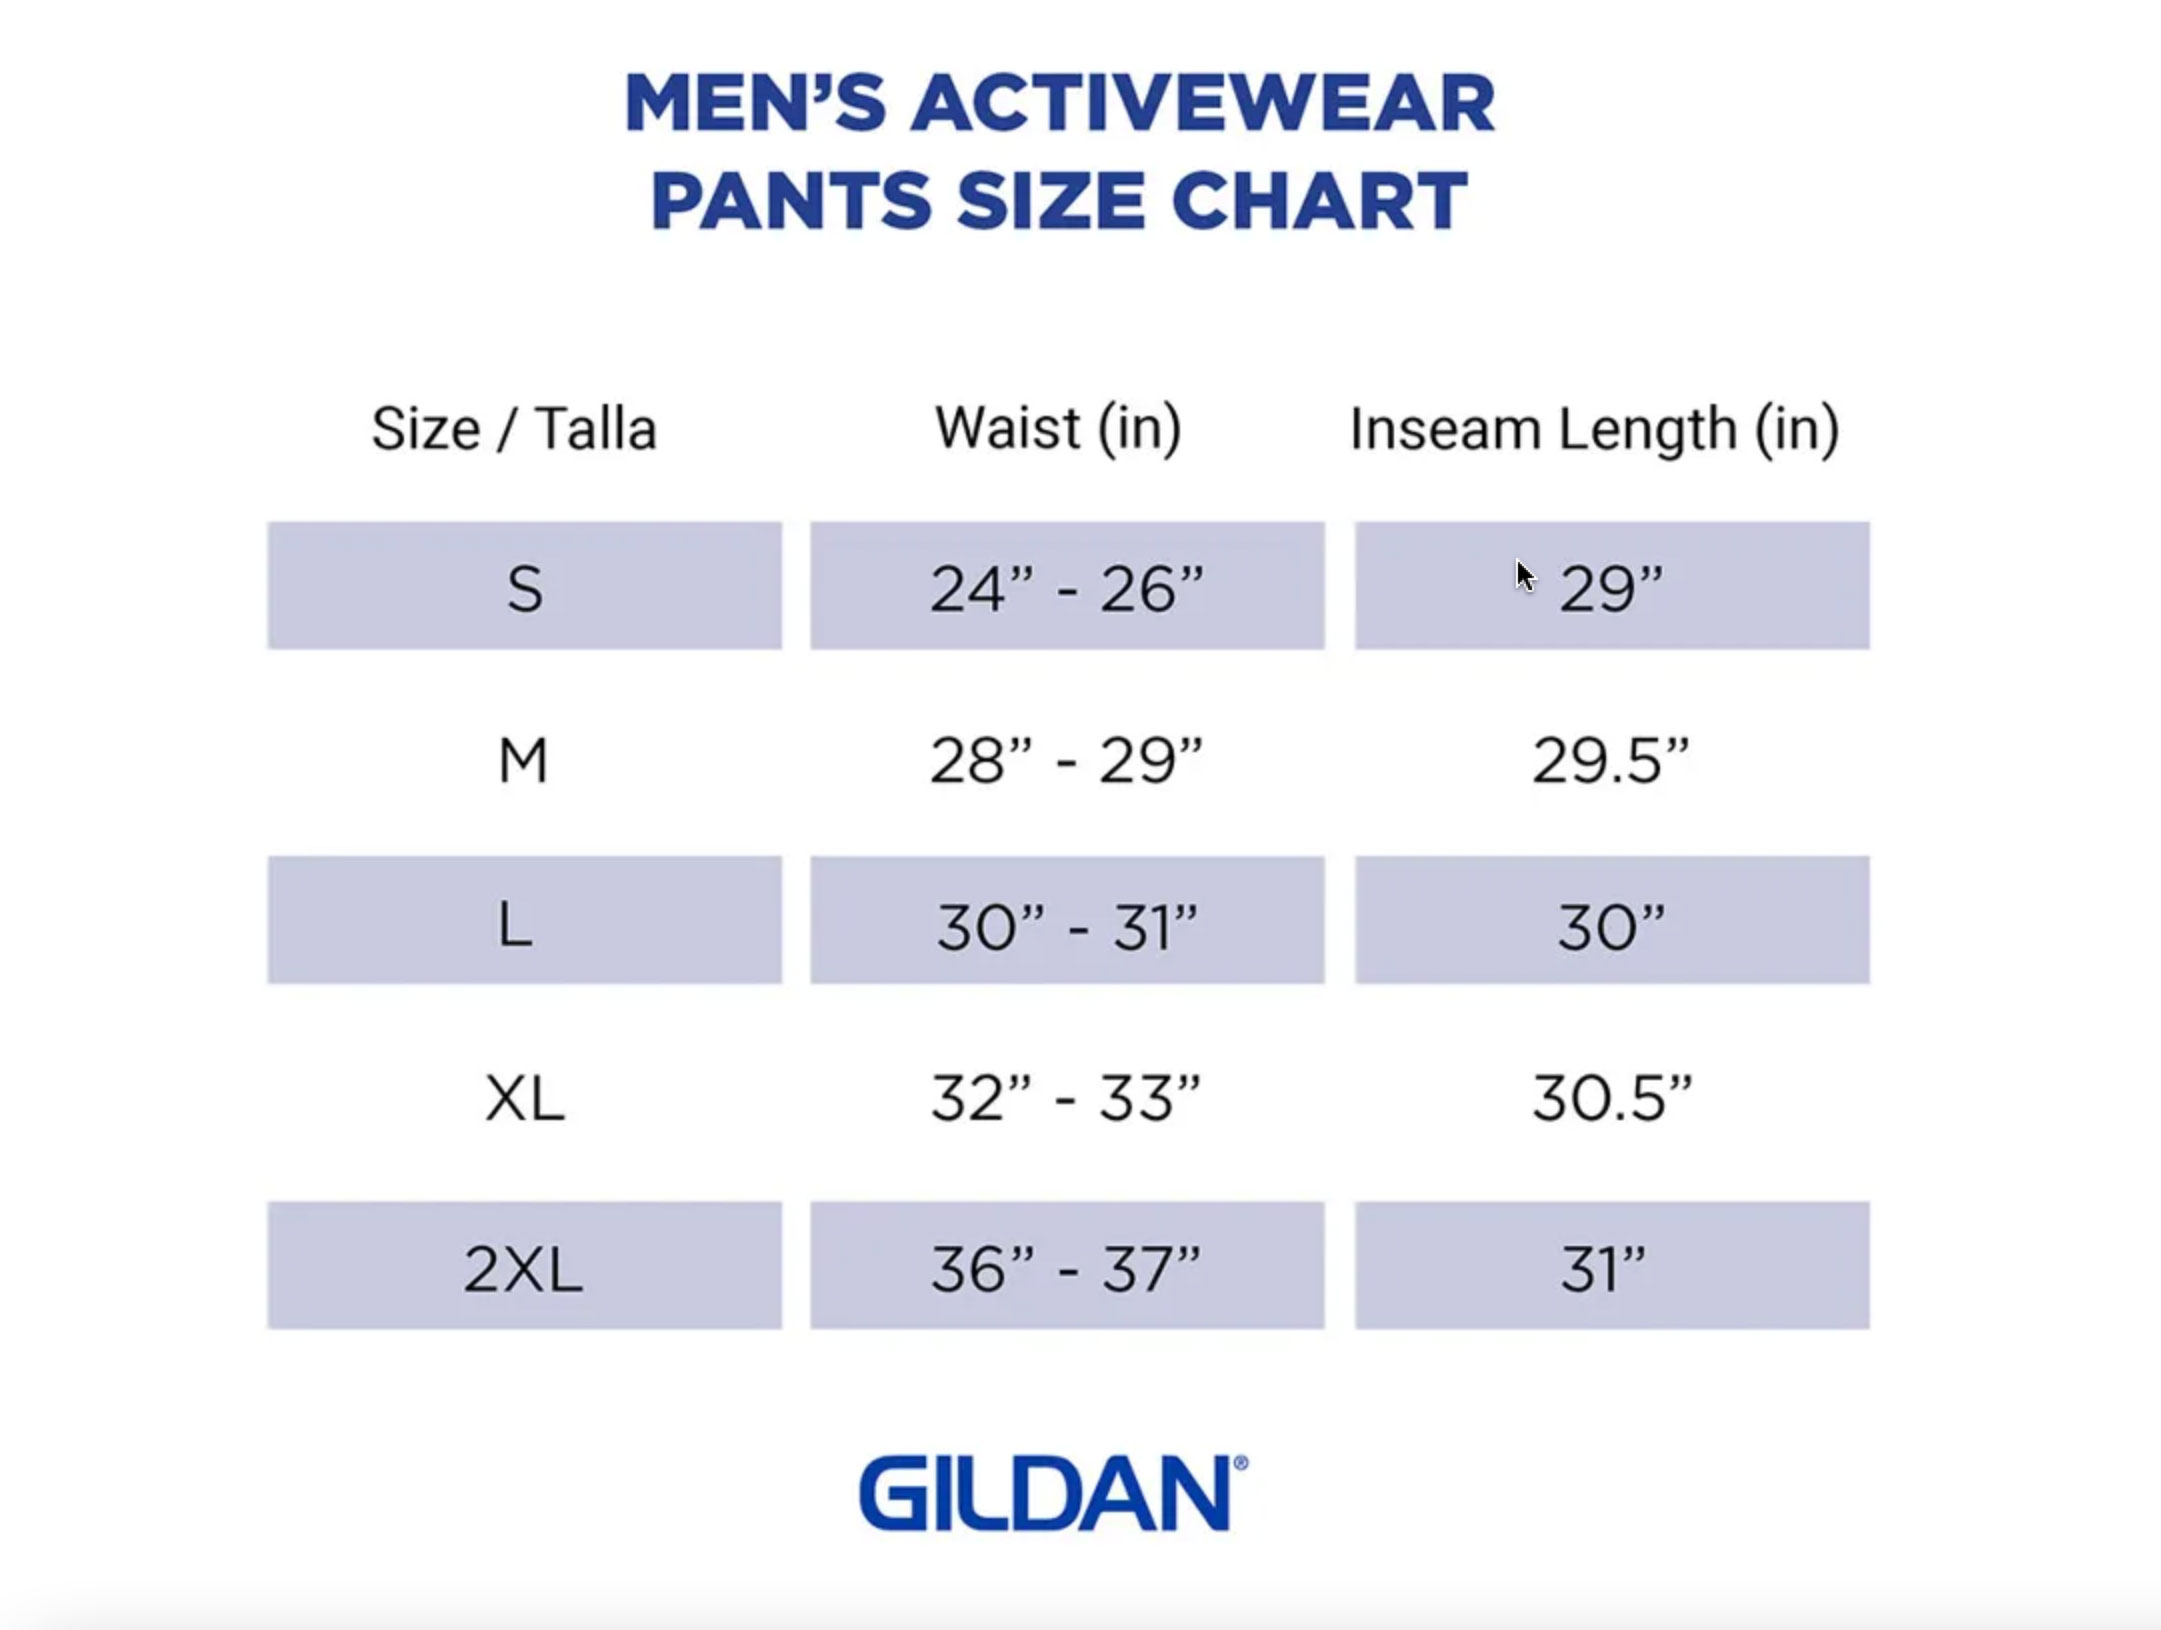 Gildan men's activewear pants size chart.